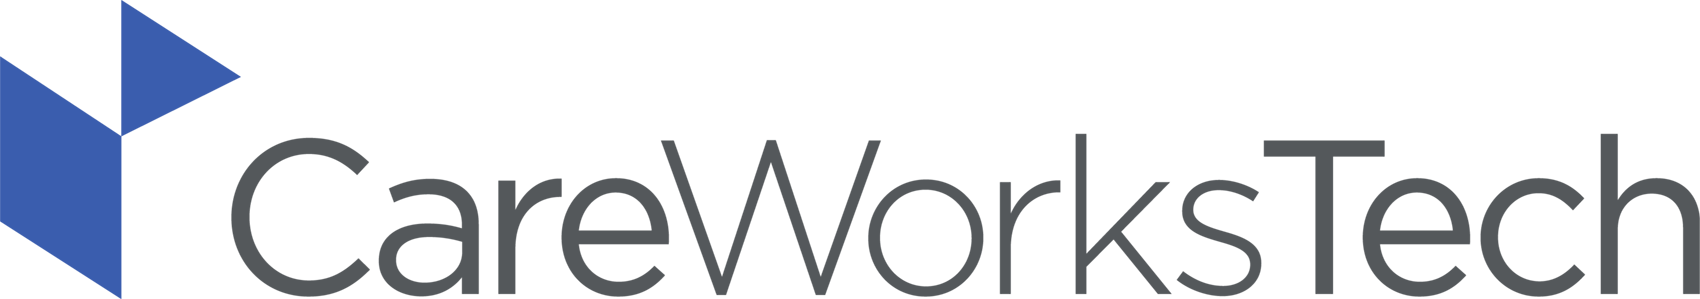 CareWorks Tech logo